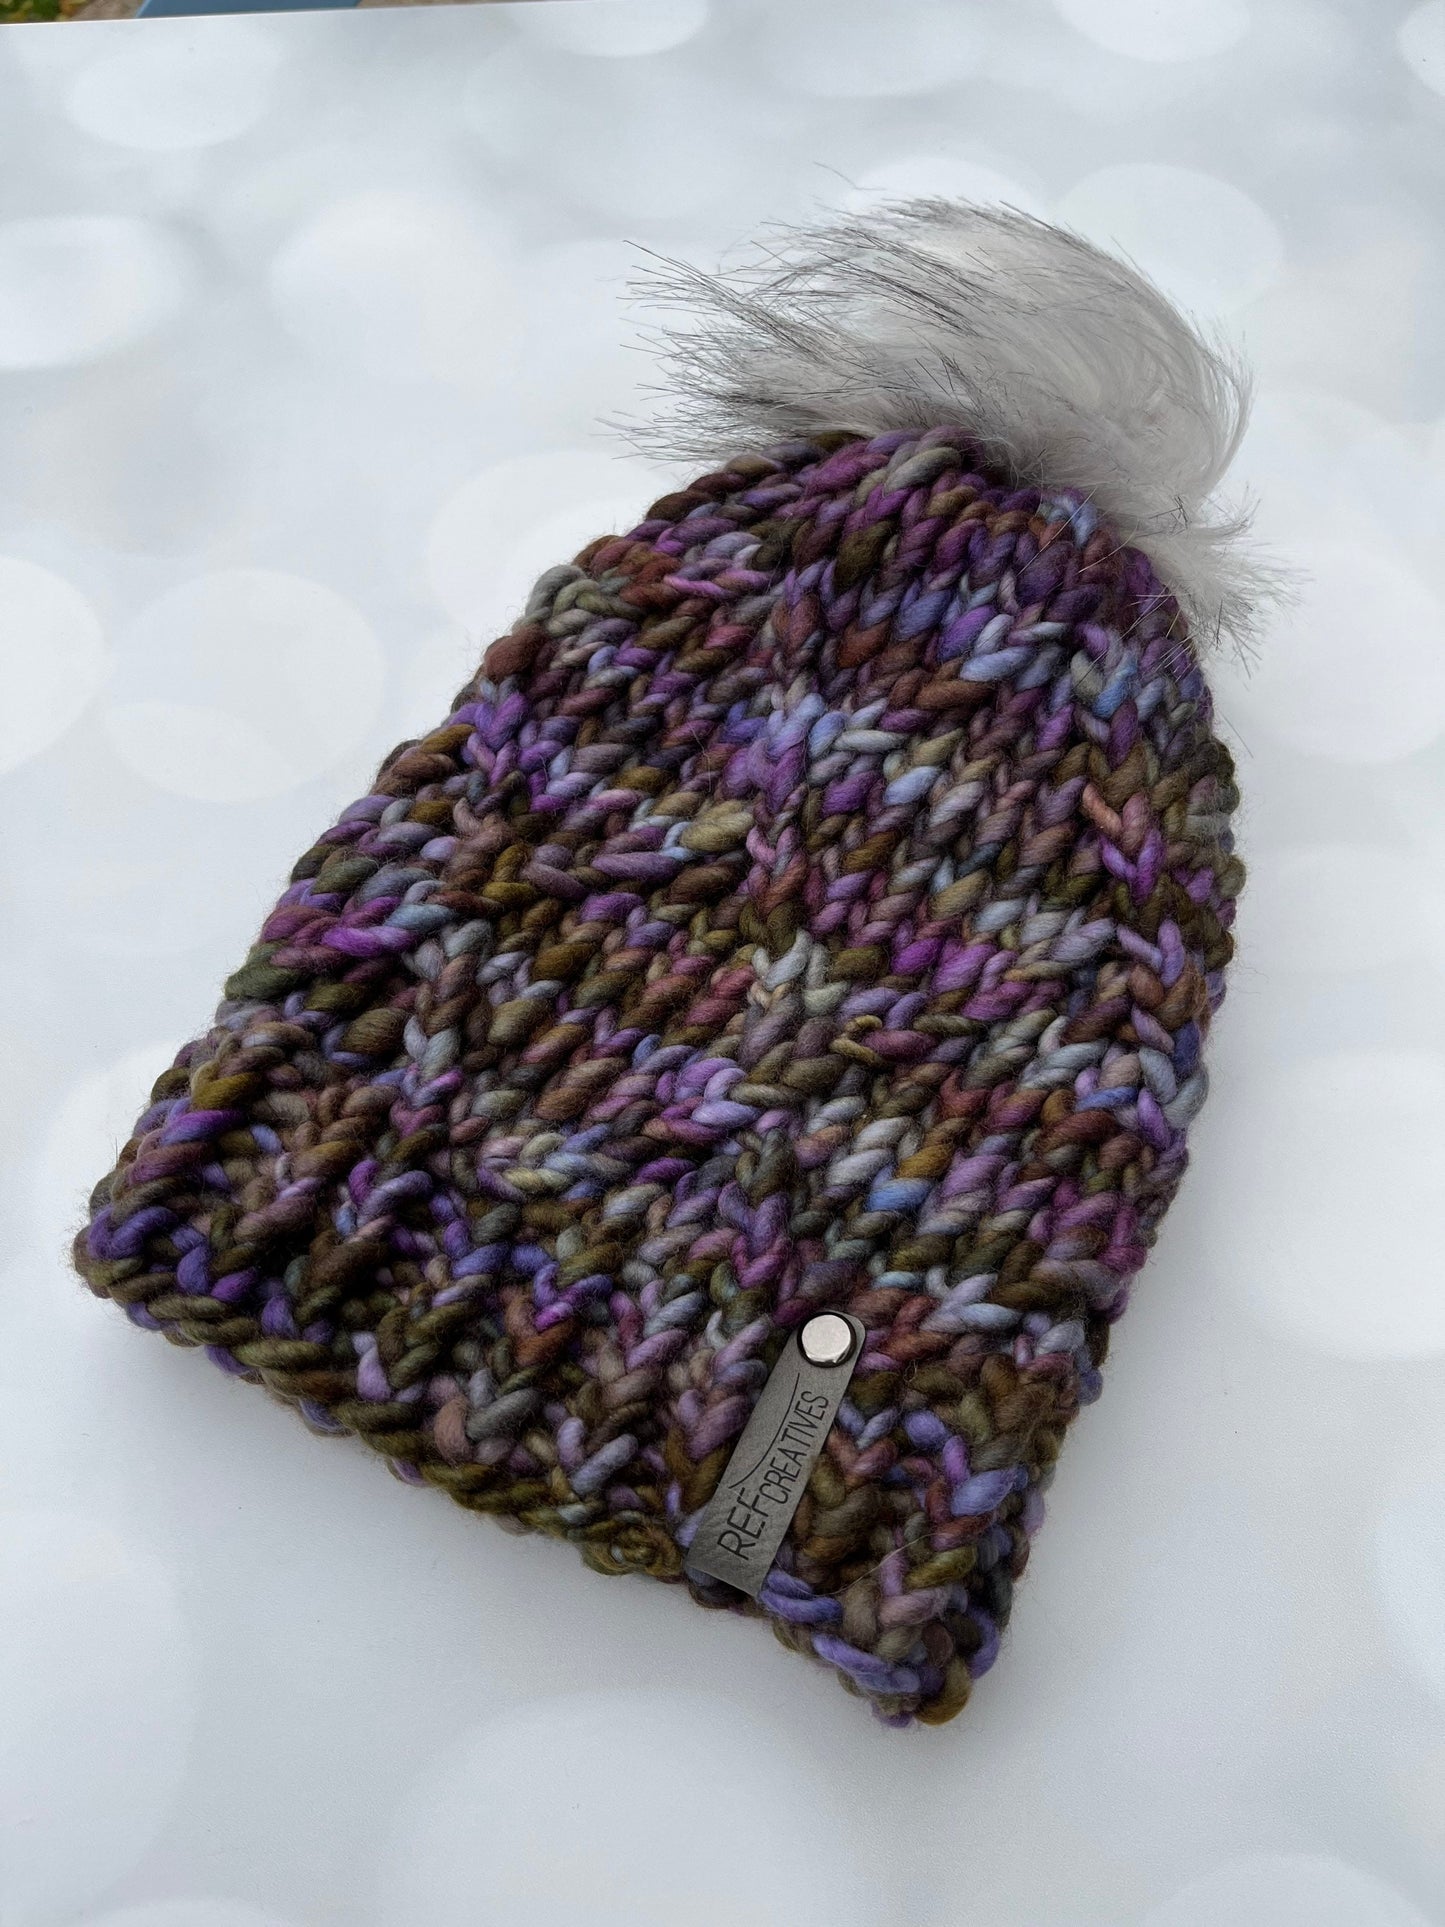 Blackberry Bush Lattice Hand Knit Hat with Hand Dyed Yarn